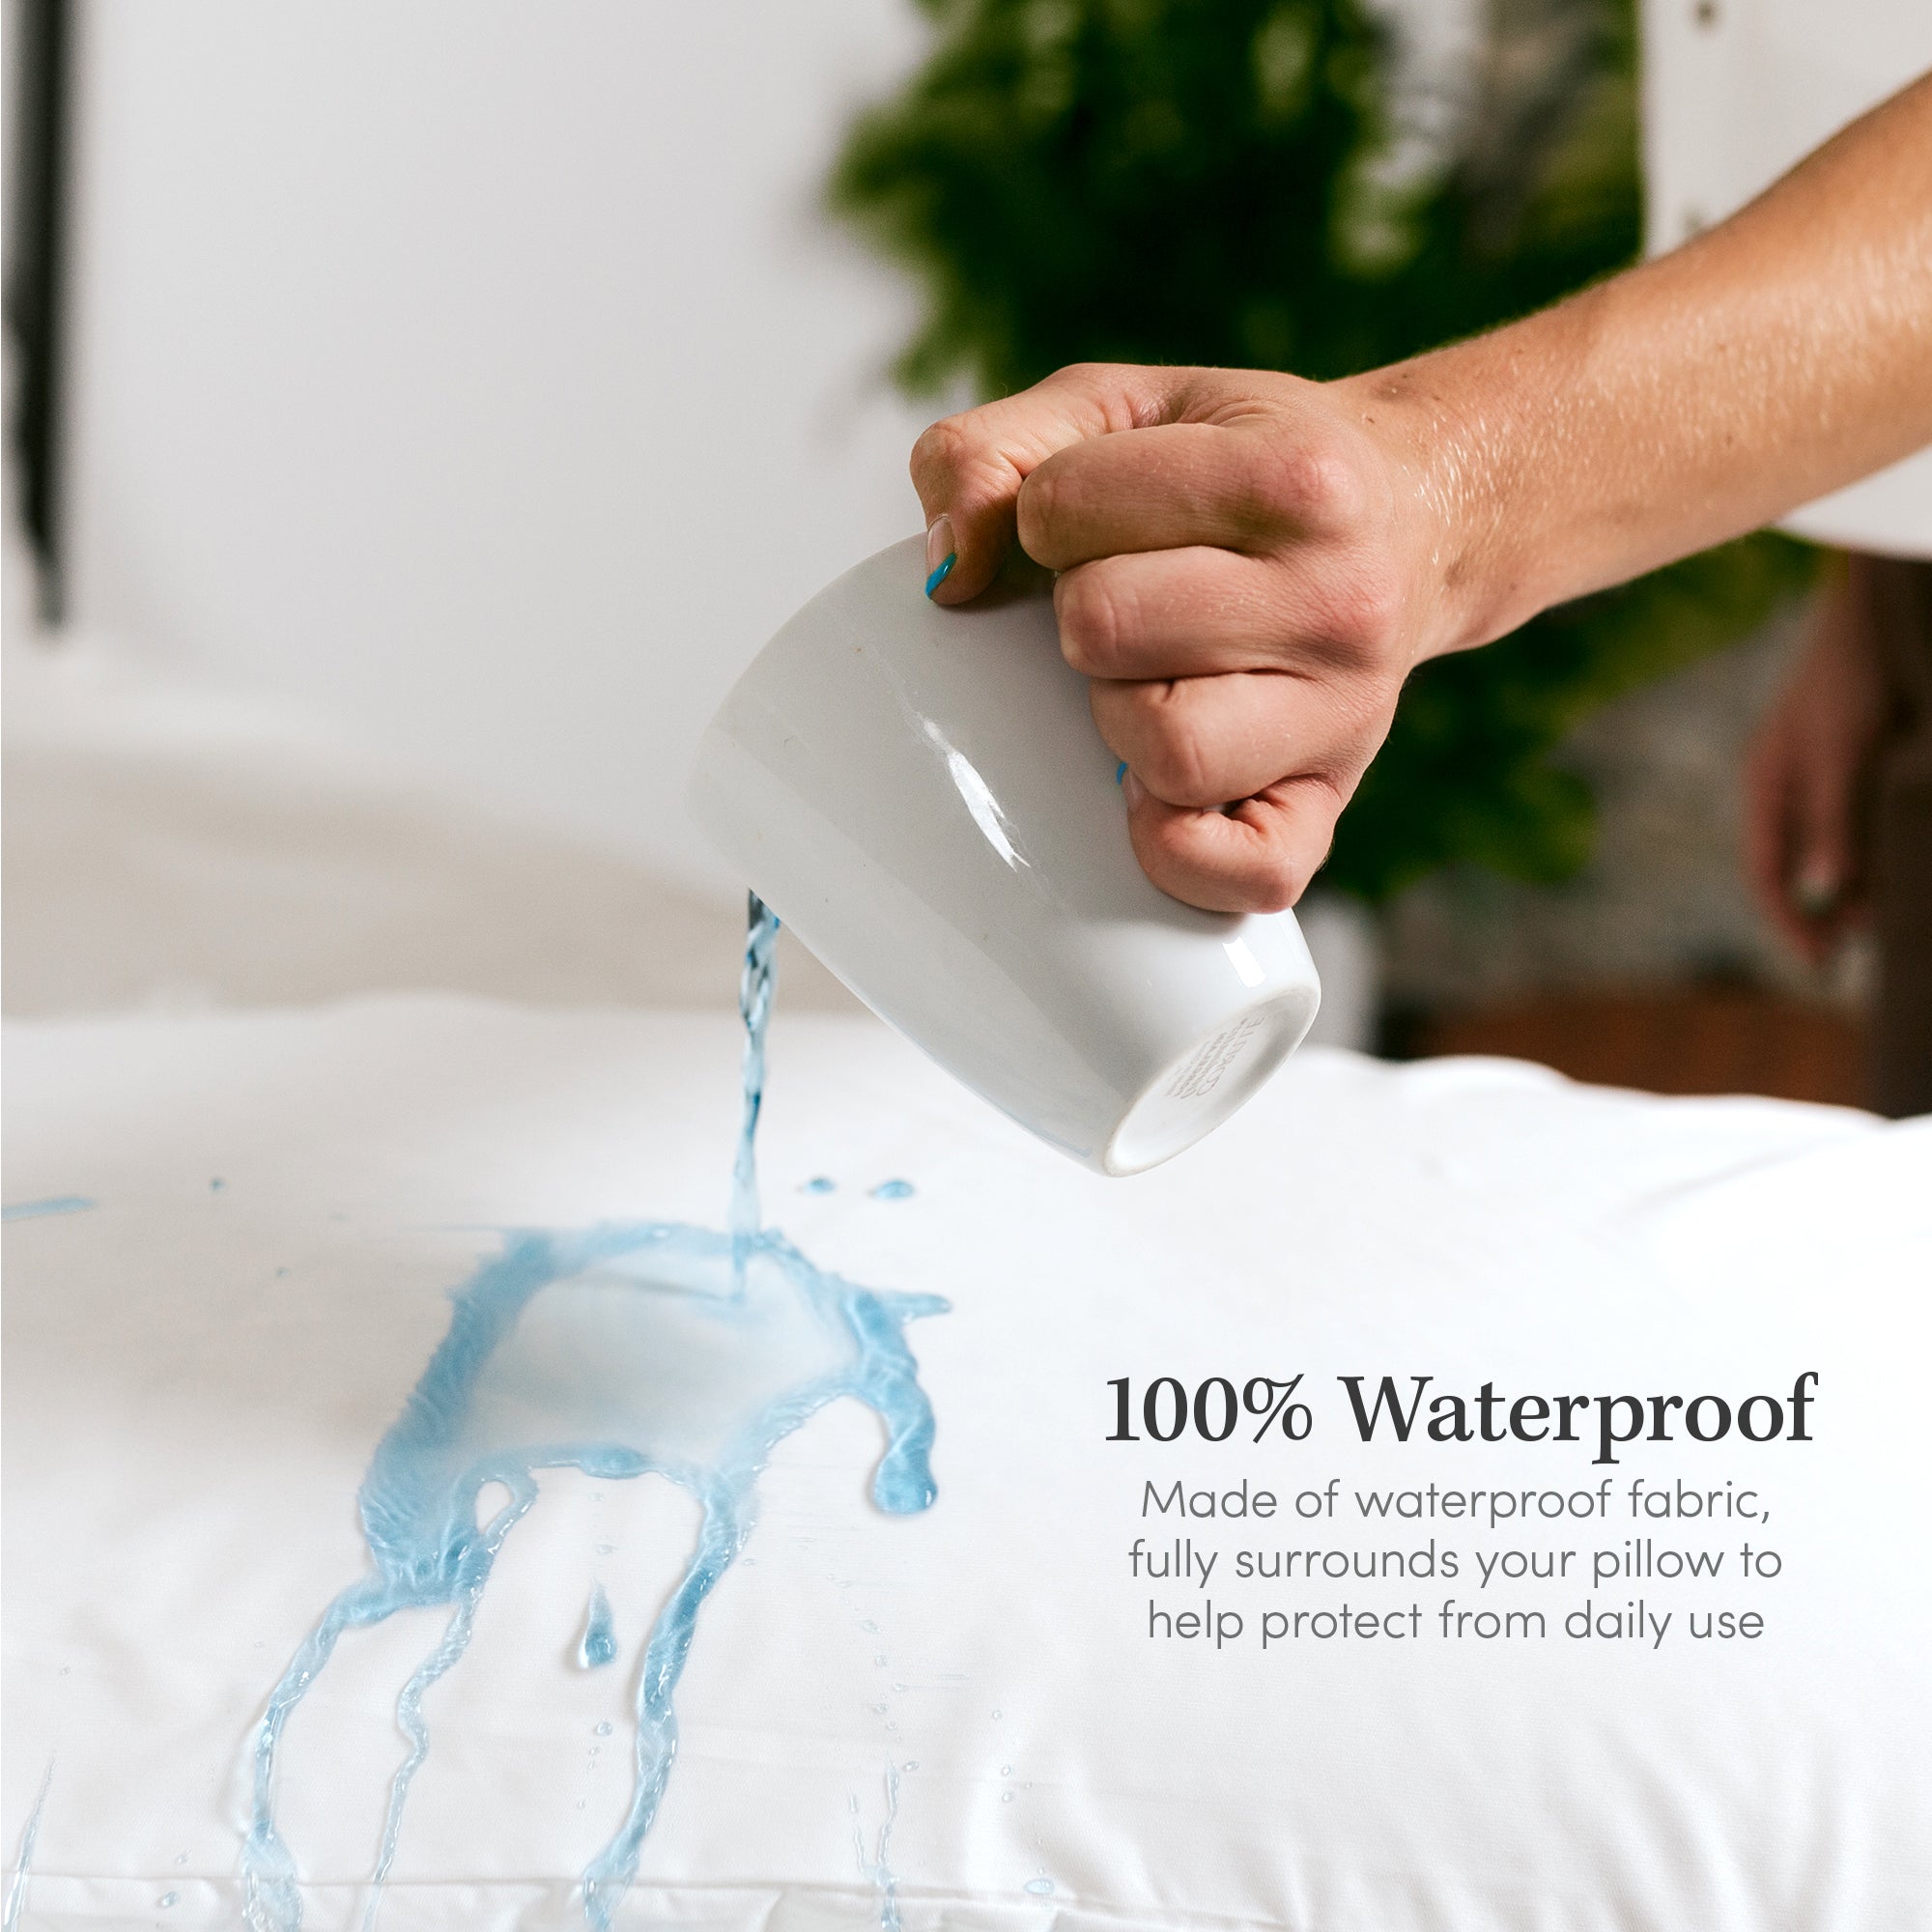 Invisicase Waterproof Pillow Encasement